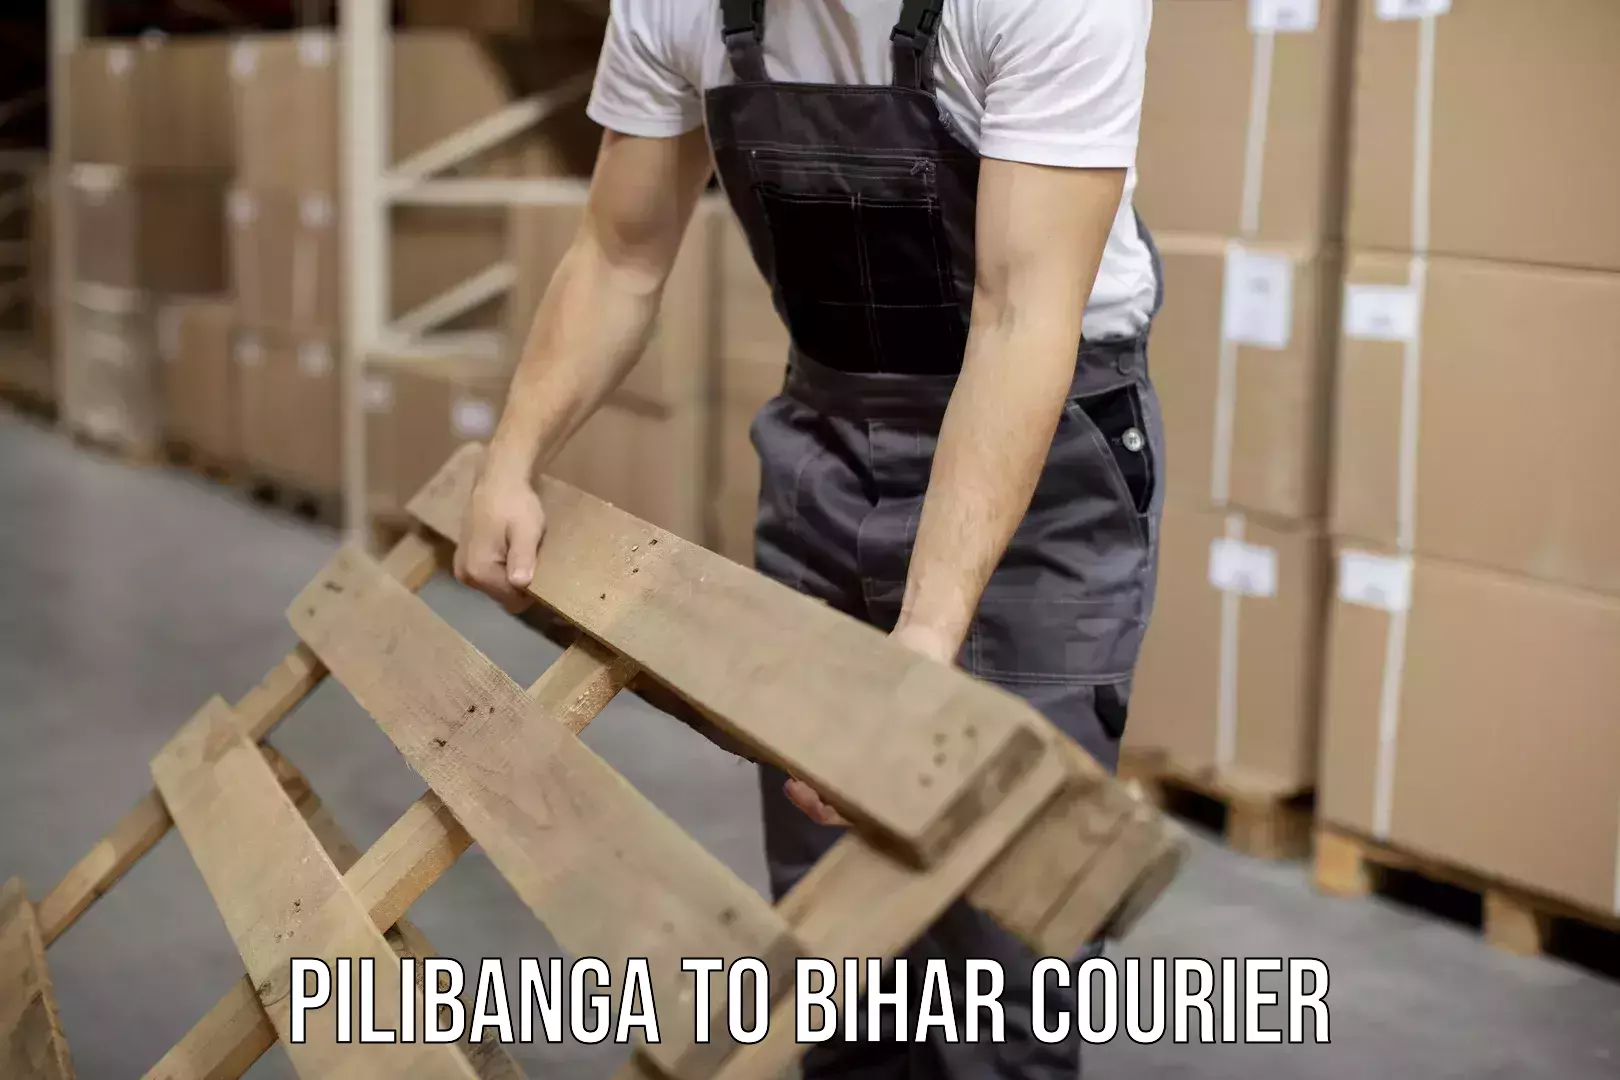 Professional courier handling Pilibanga to Patna